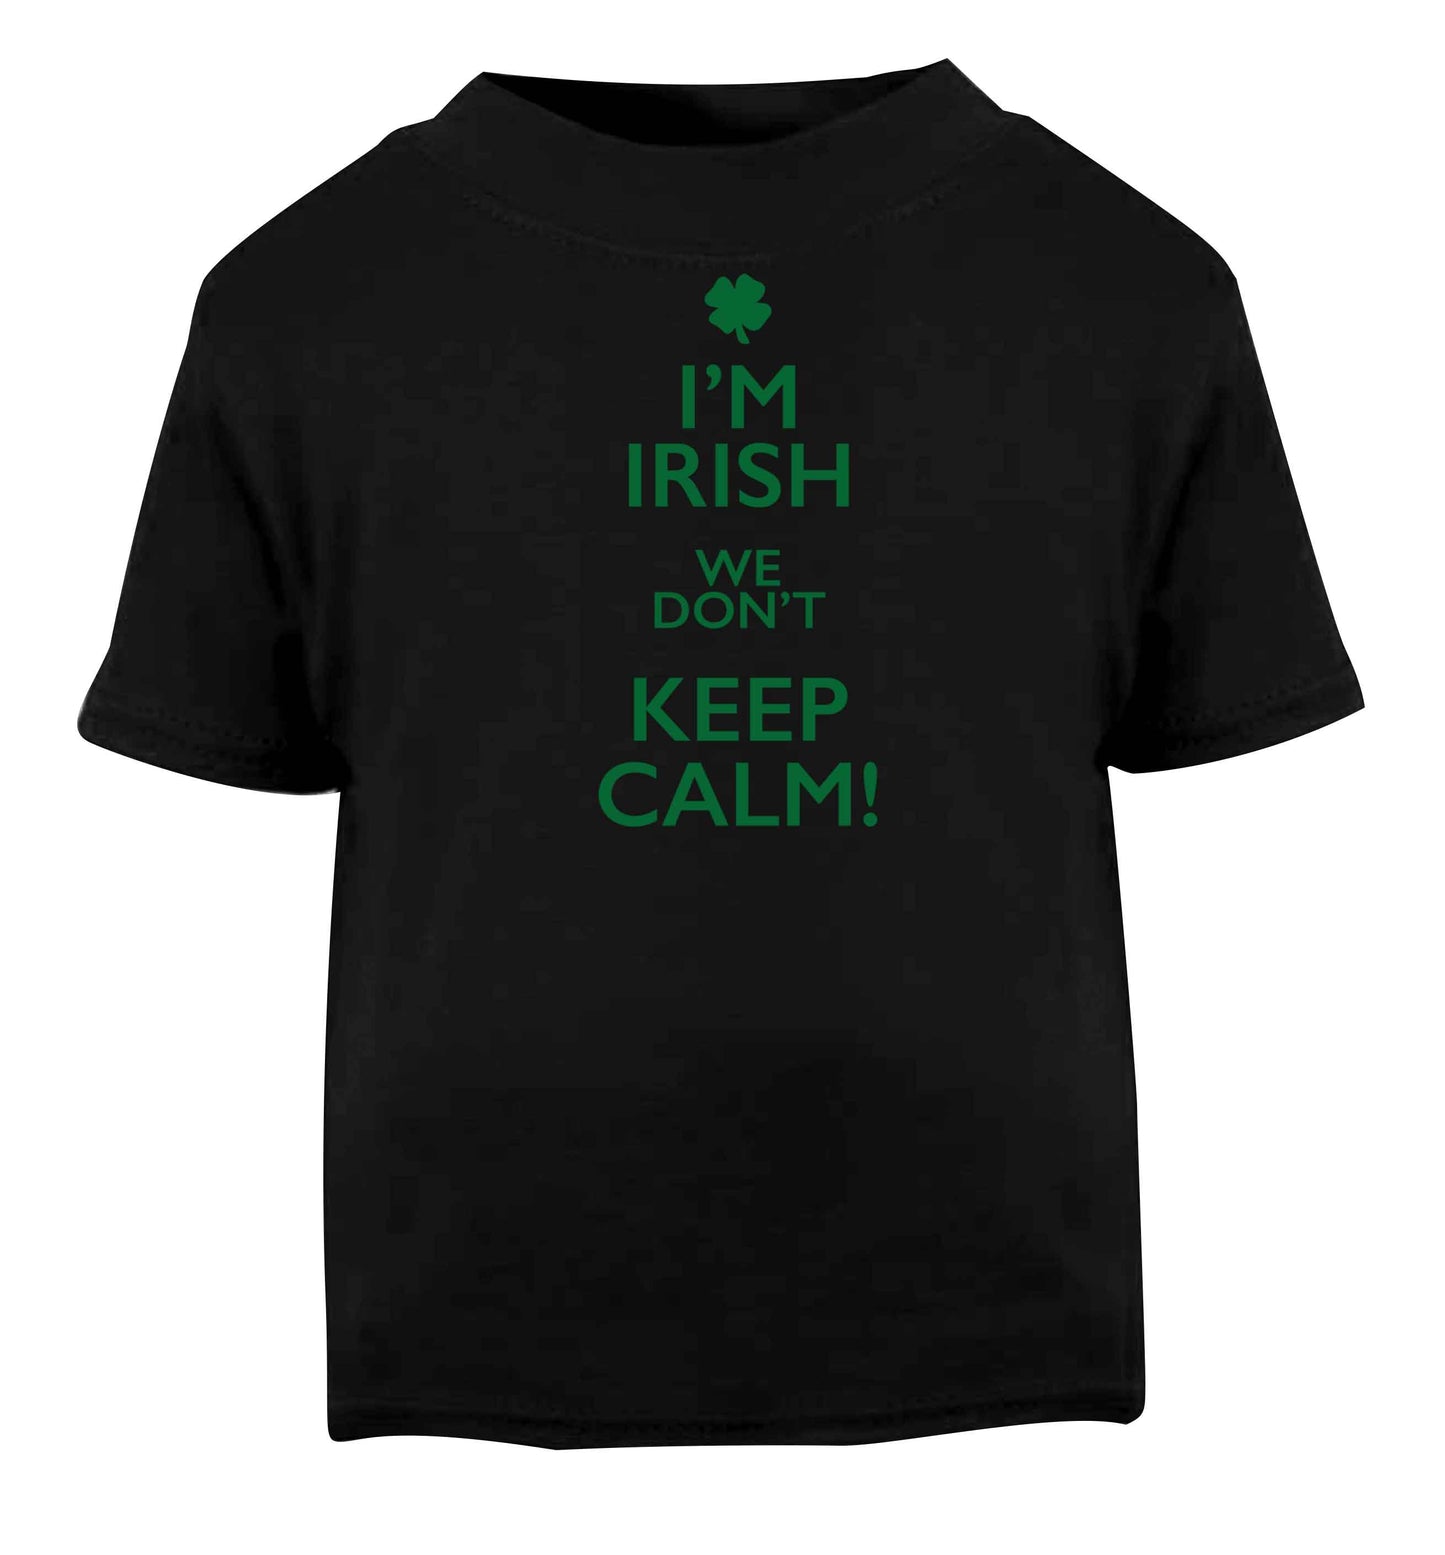 I'm Irish we don't keep calm Black baby toddler Tshirt 2 years